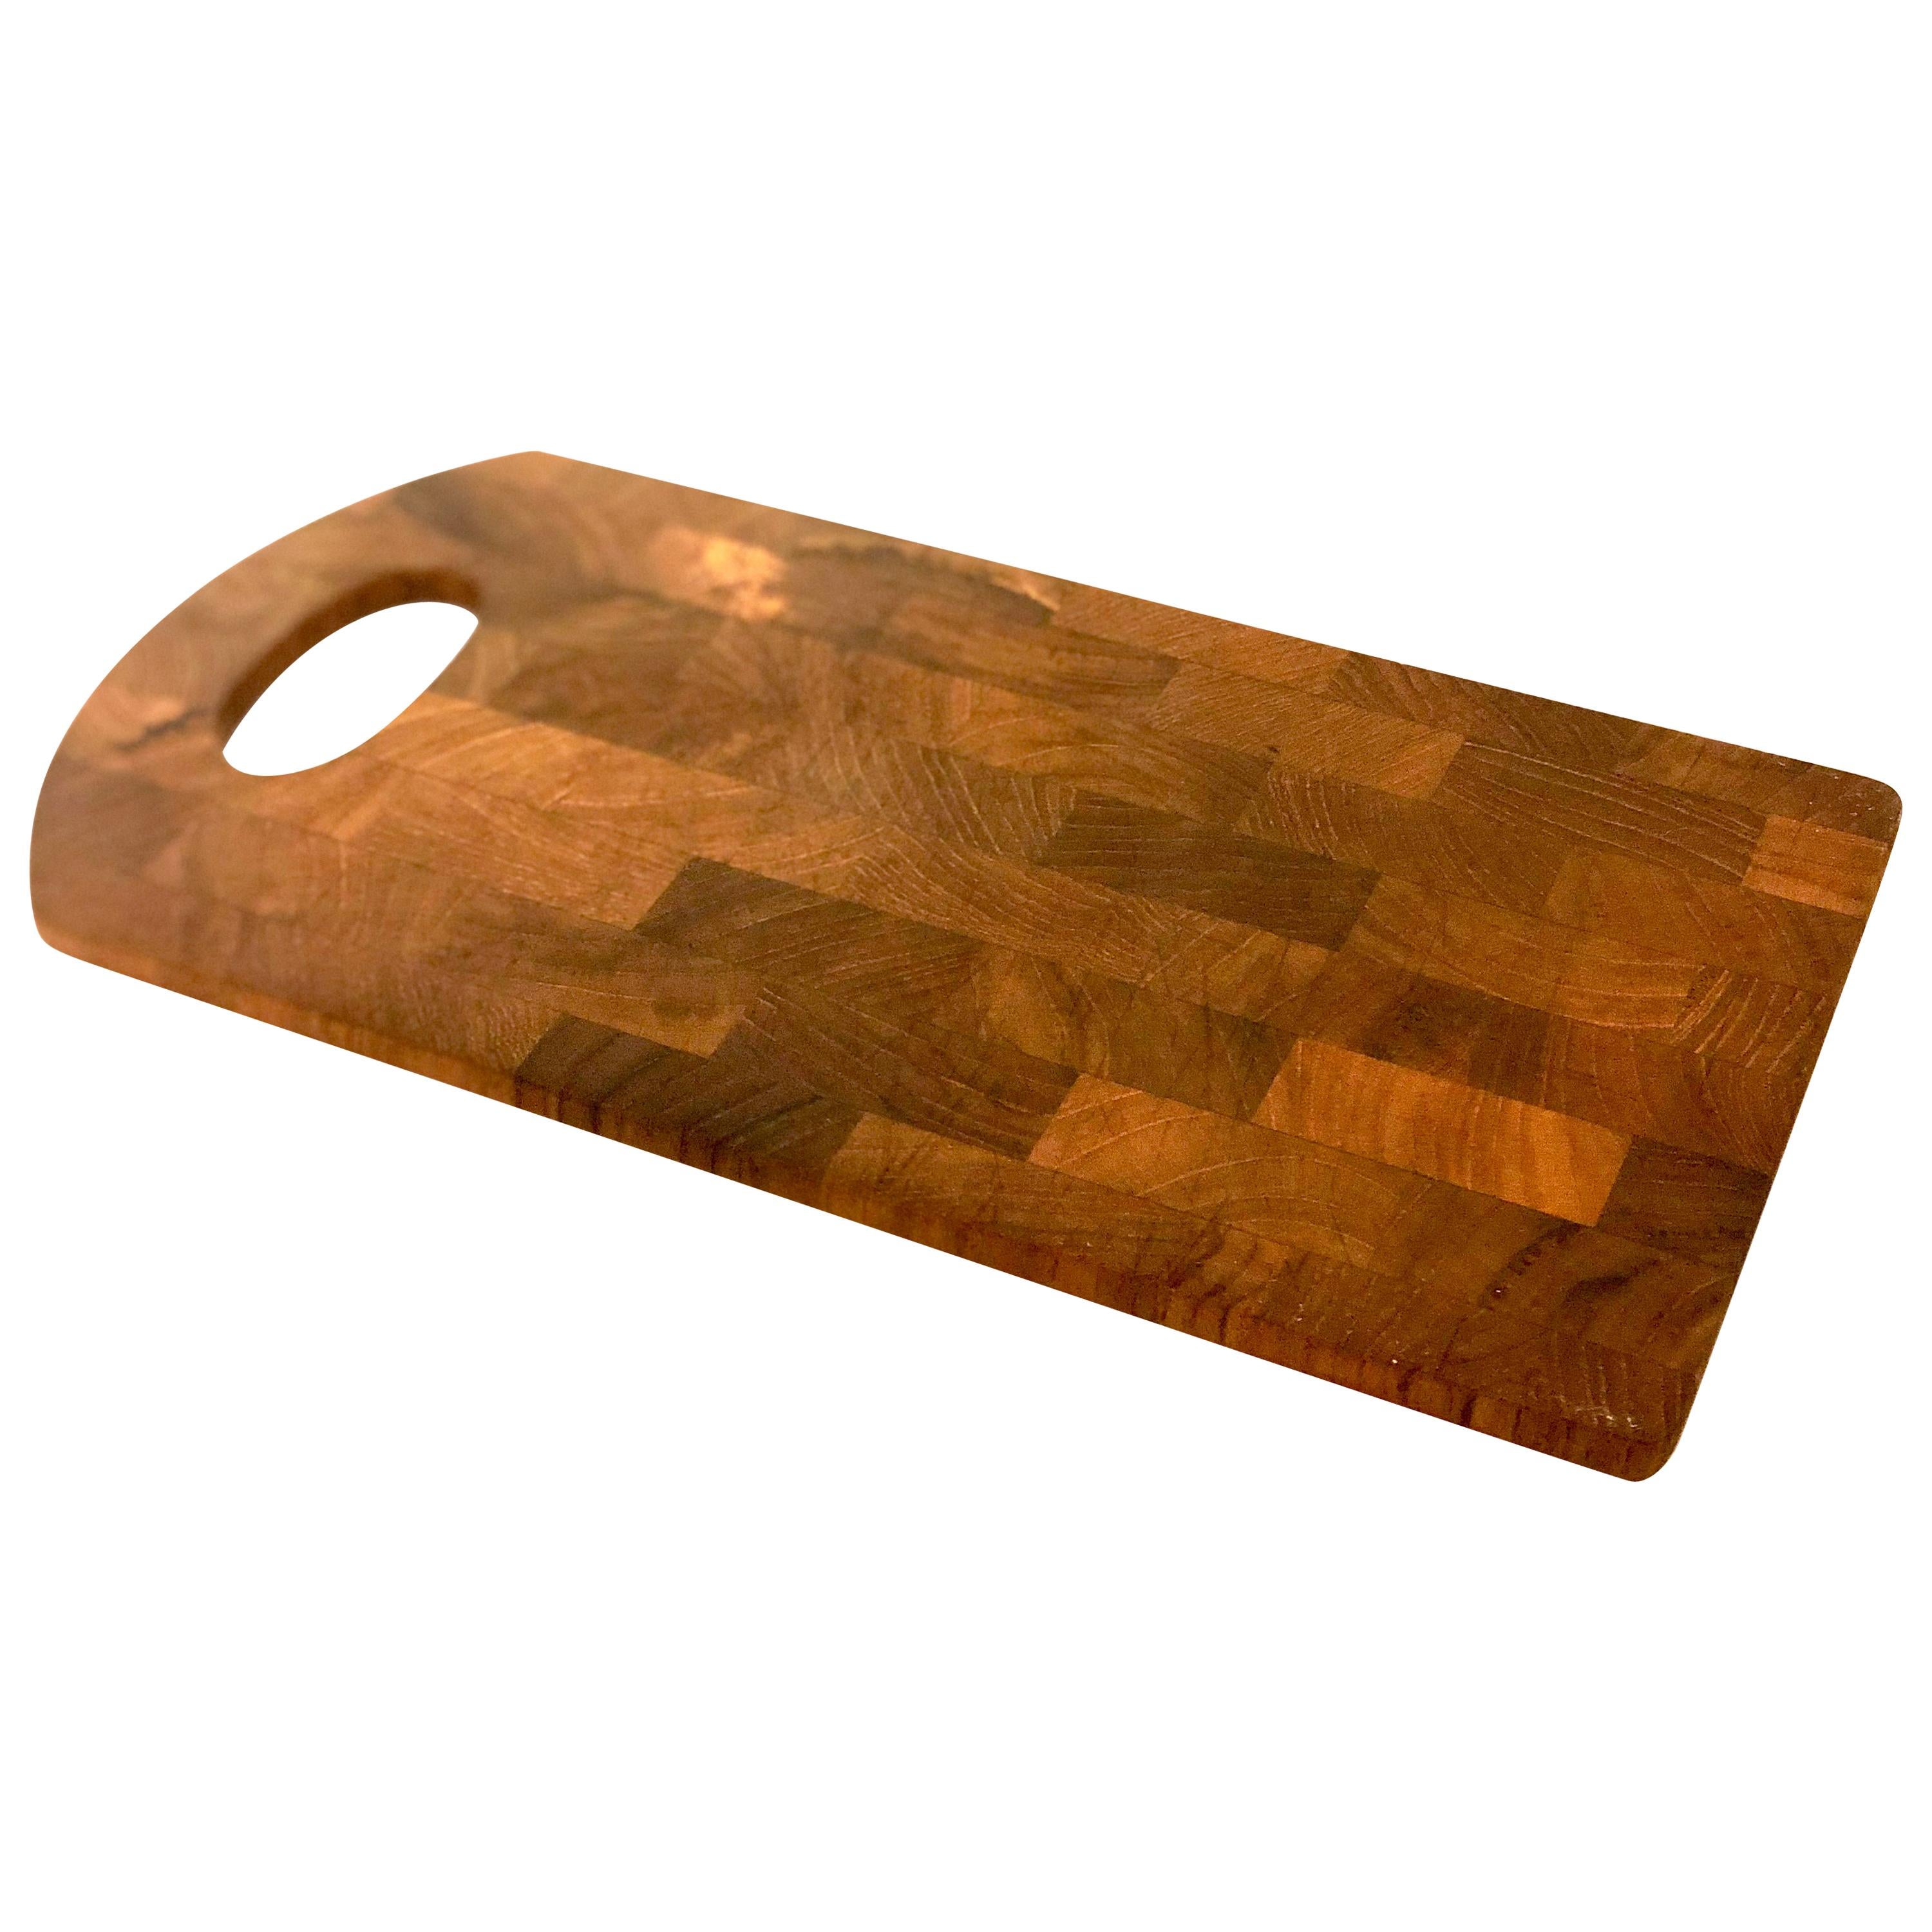 Petite Dansk Solid Teak Danish Modern Tray/Cutting Board by Quistgaard